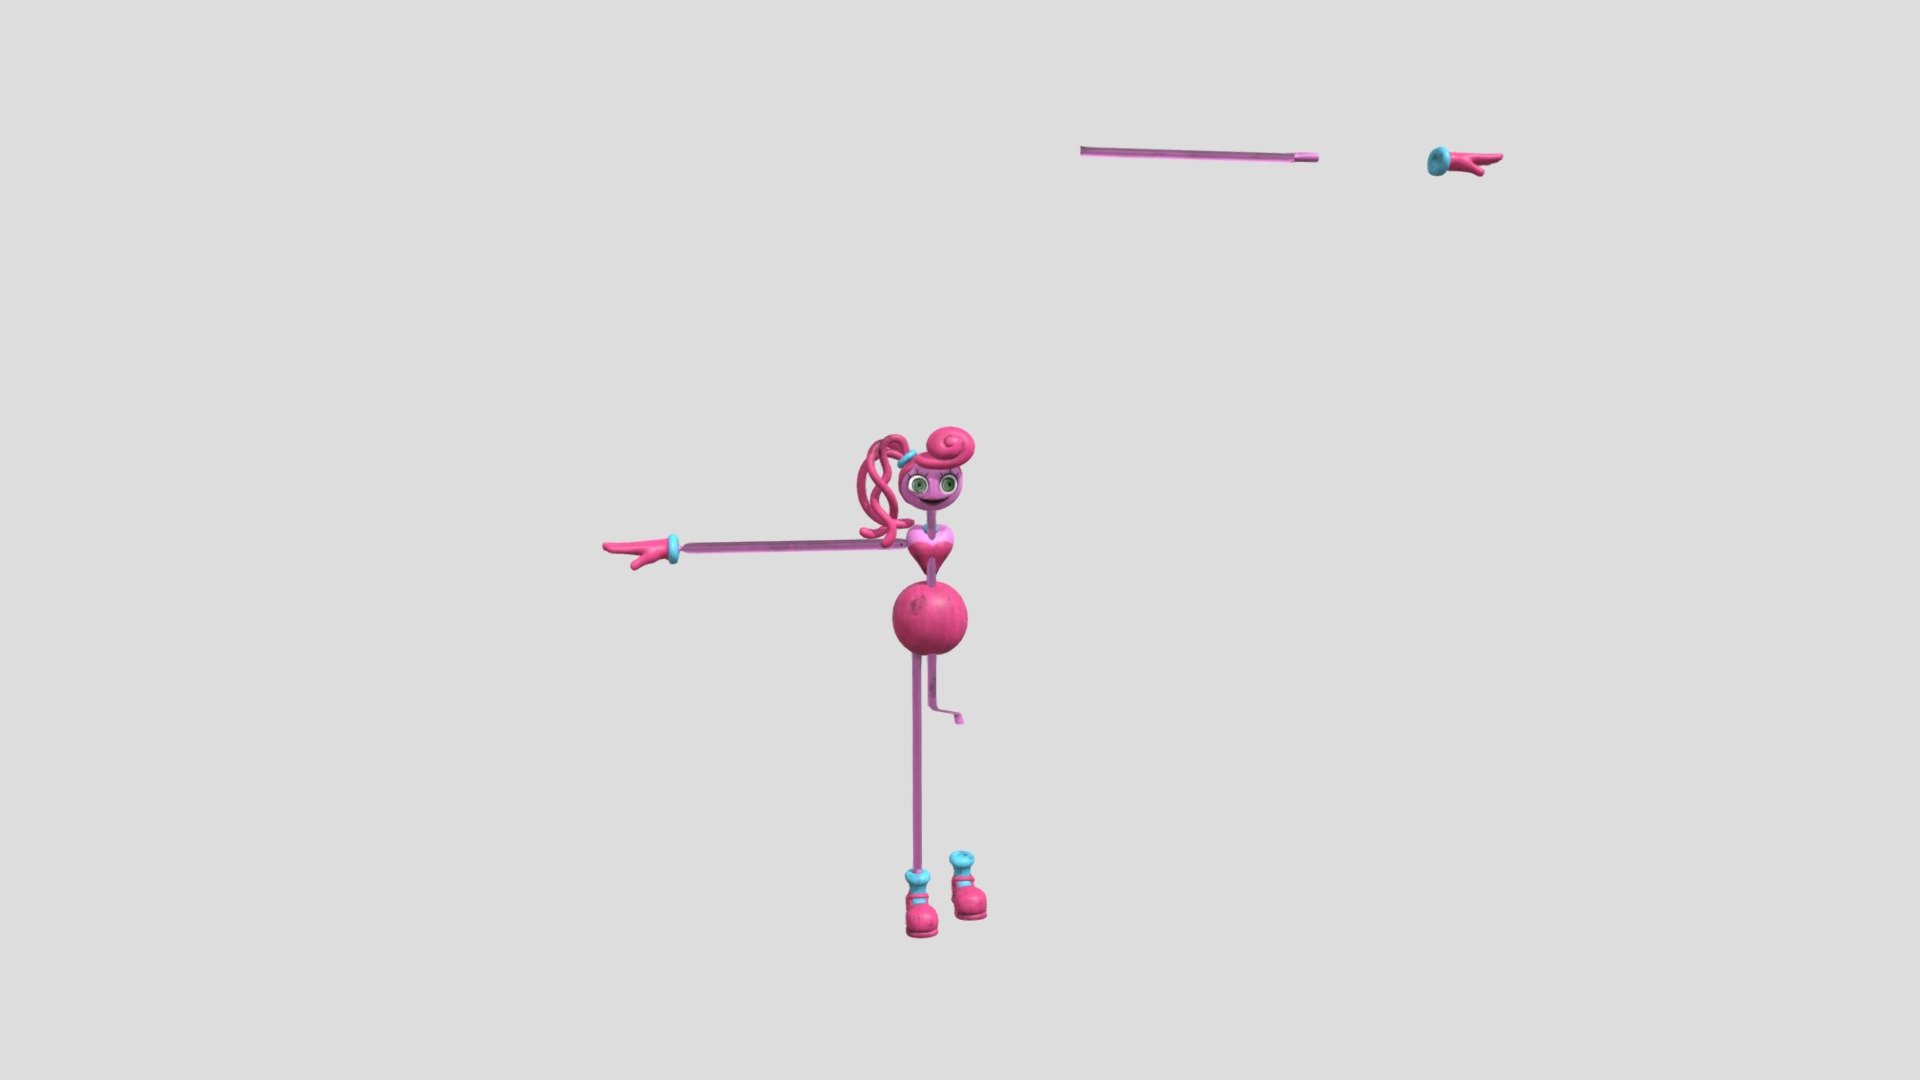 Mommy Long Legs - Poppy Playtime Chapter 2 - Download Free 3D model by  Valcopp (@Valcopp) [d12a328]